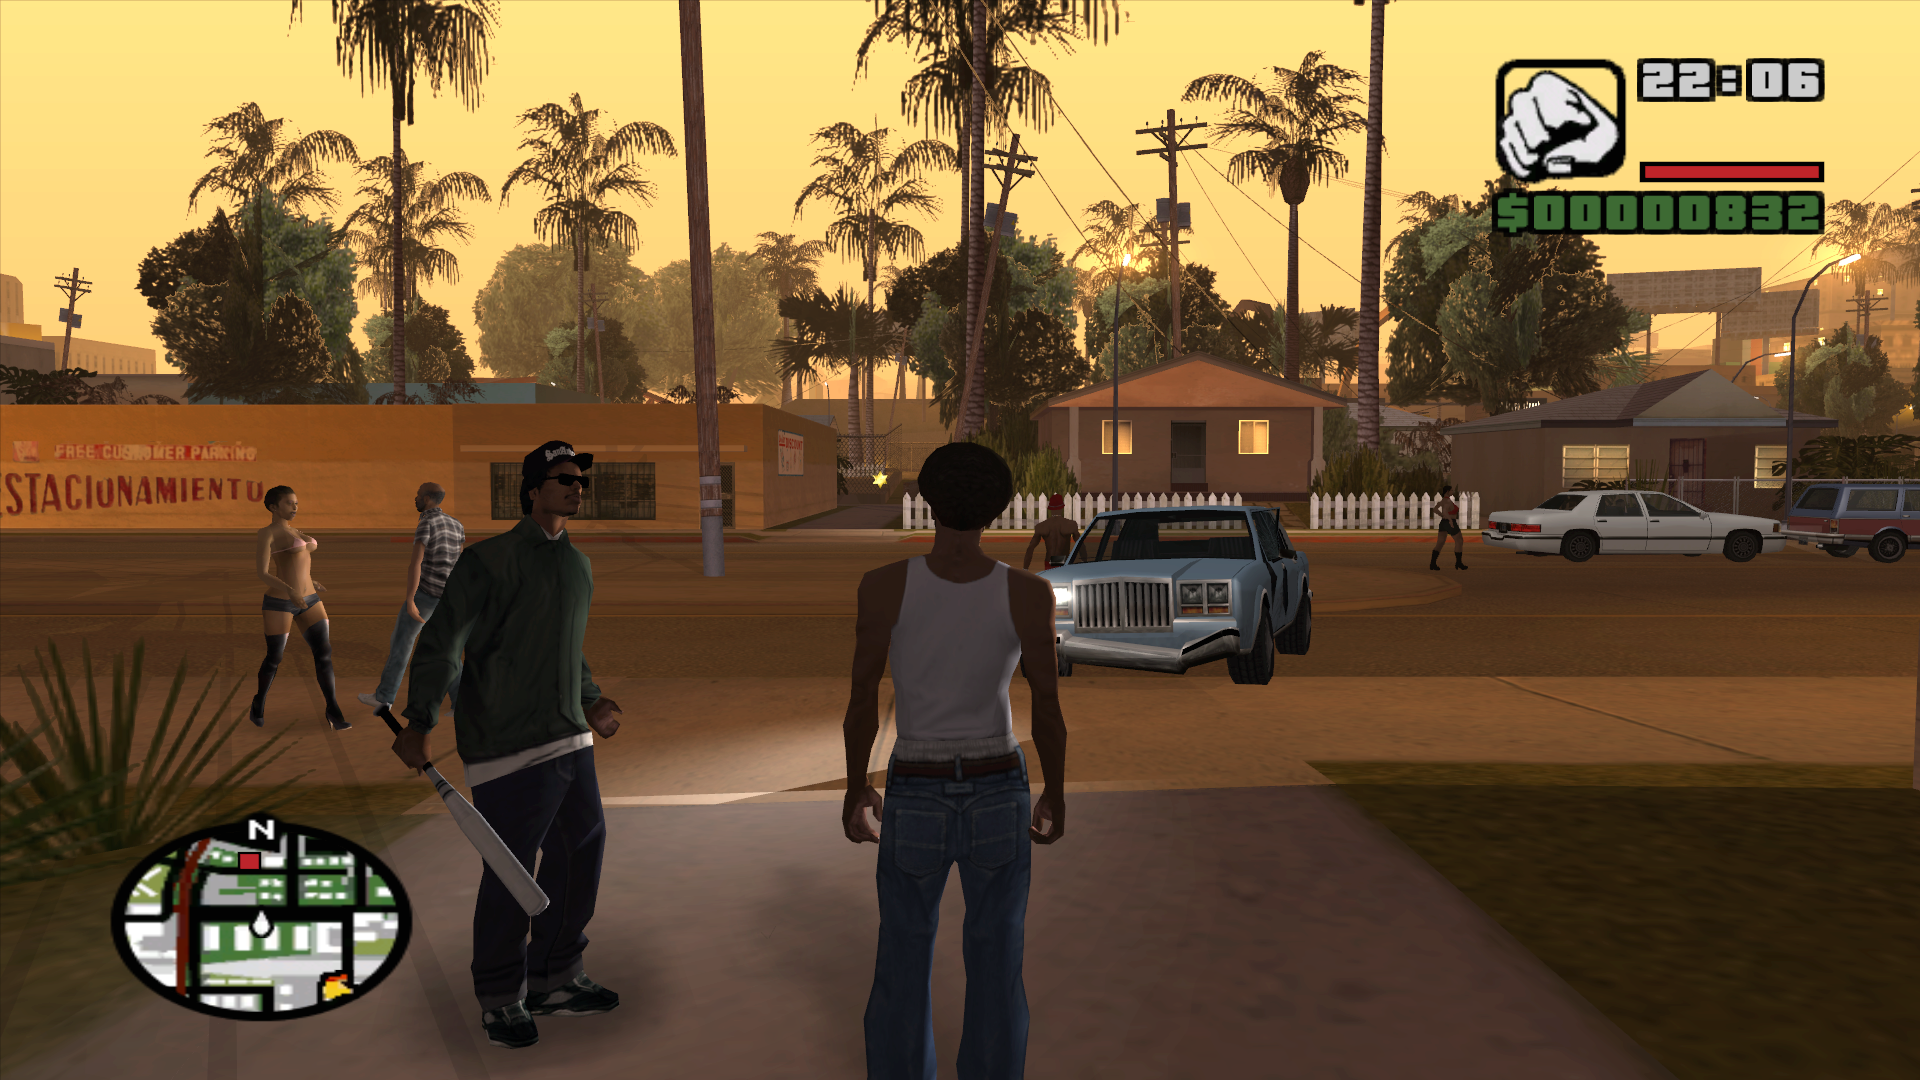 Игра gta нужен. Grand Theft auto Сан андреас. Grand Theft Anto San Adreas. Grand Theft auto San Andreas Grand. Grand Theft auto: San Andreas 2.